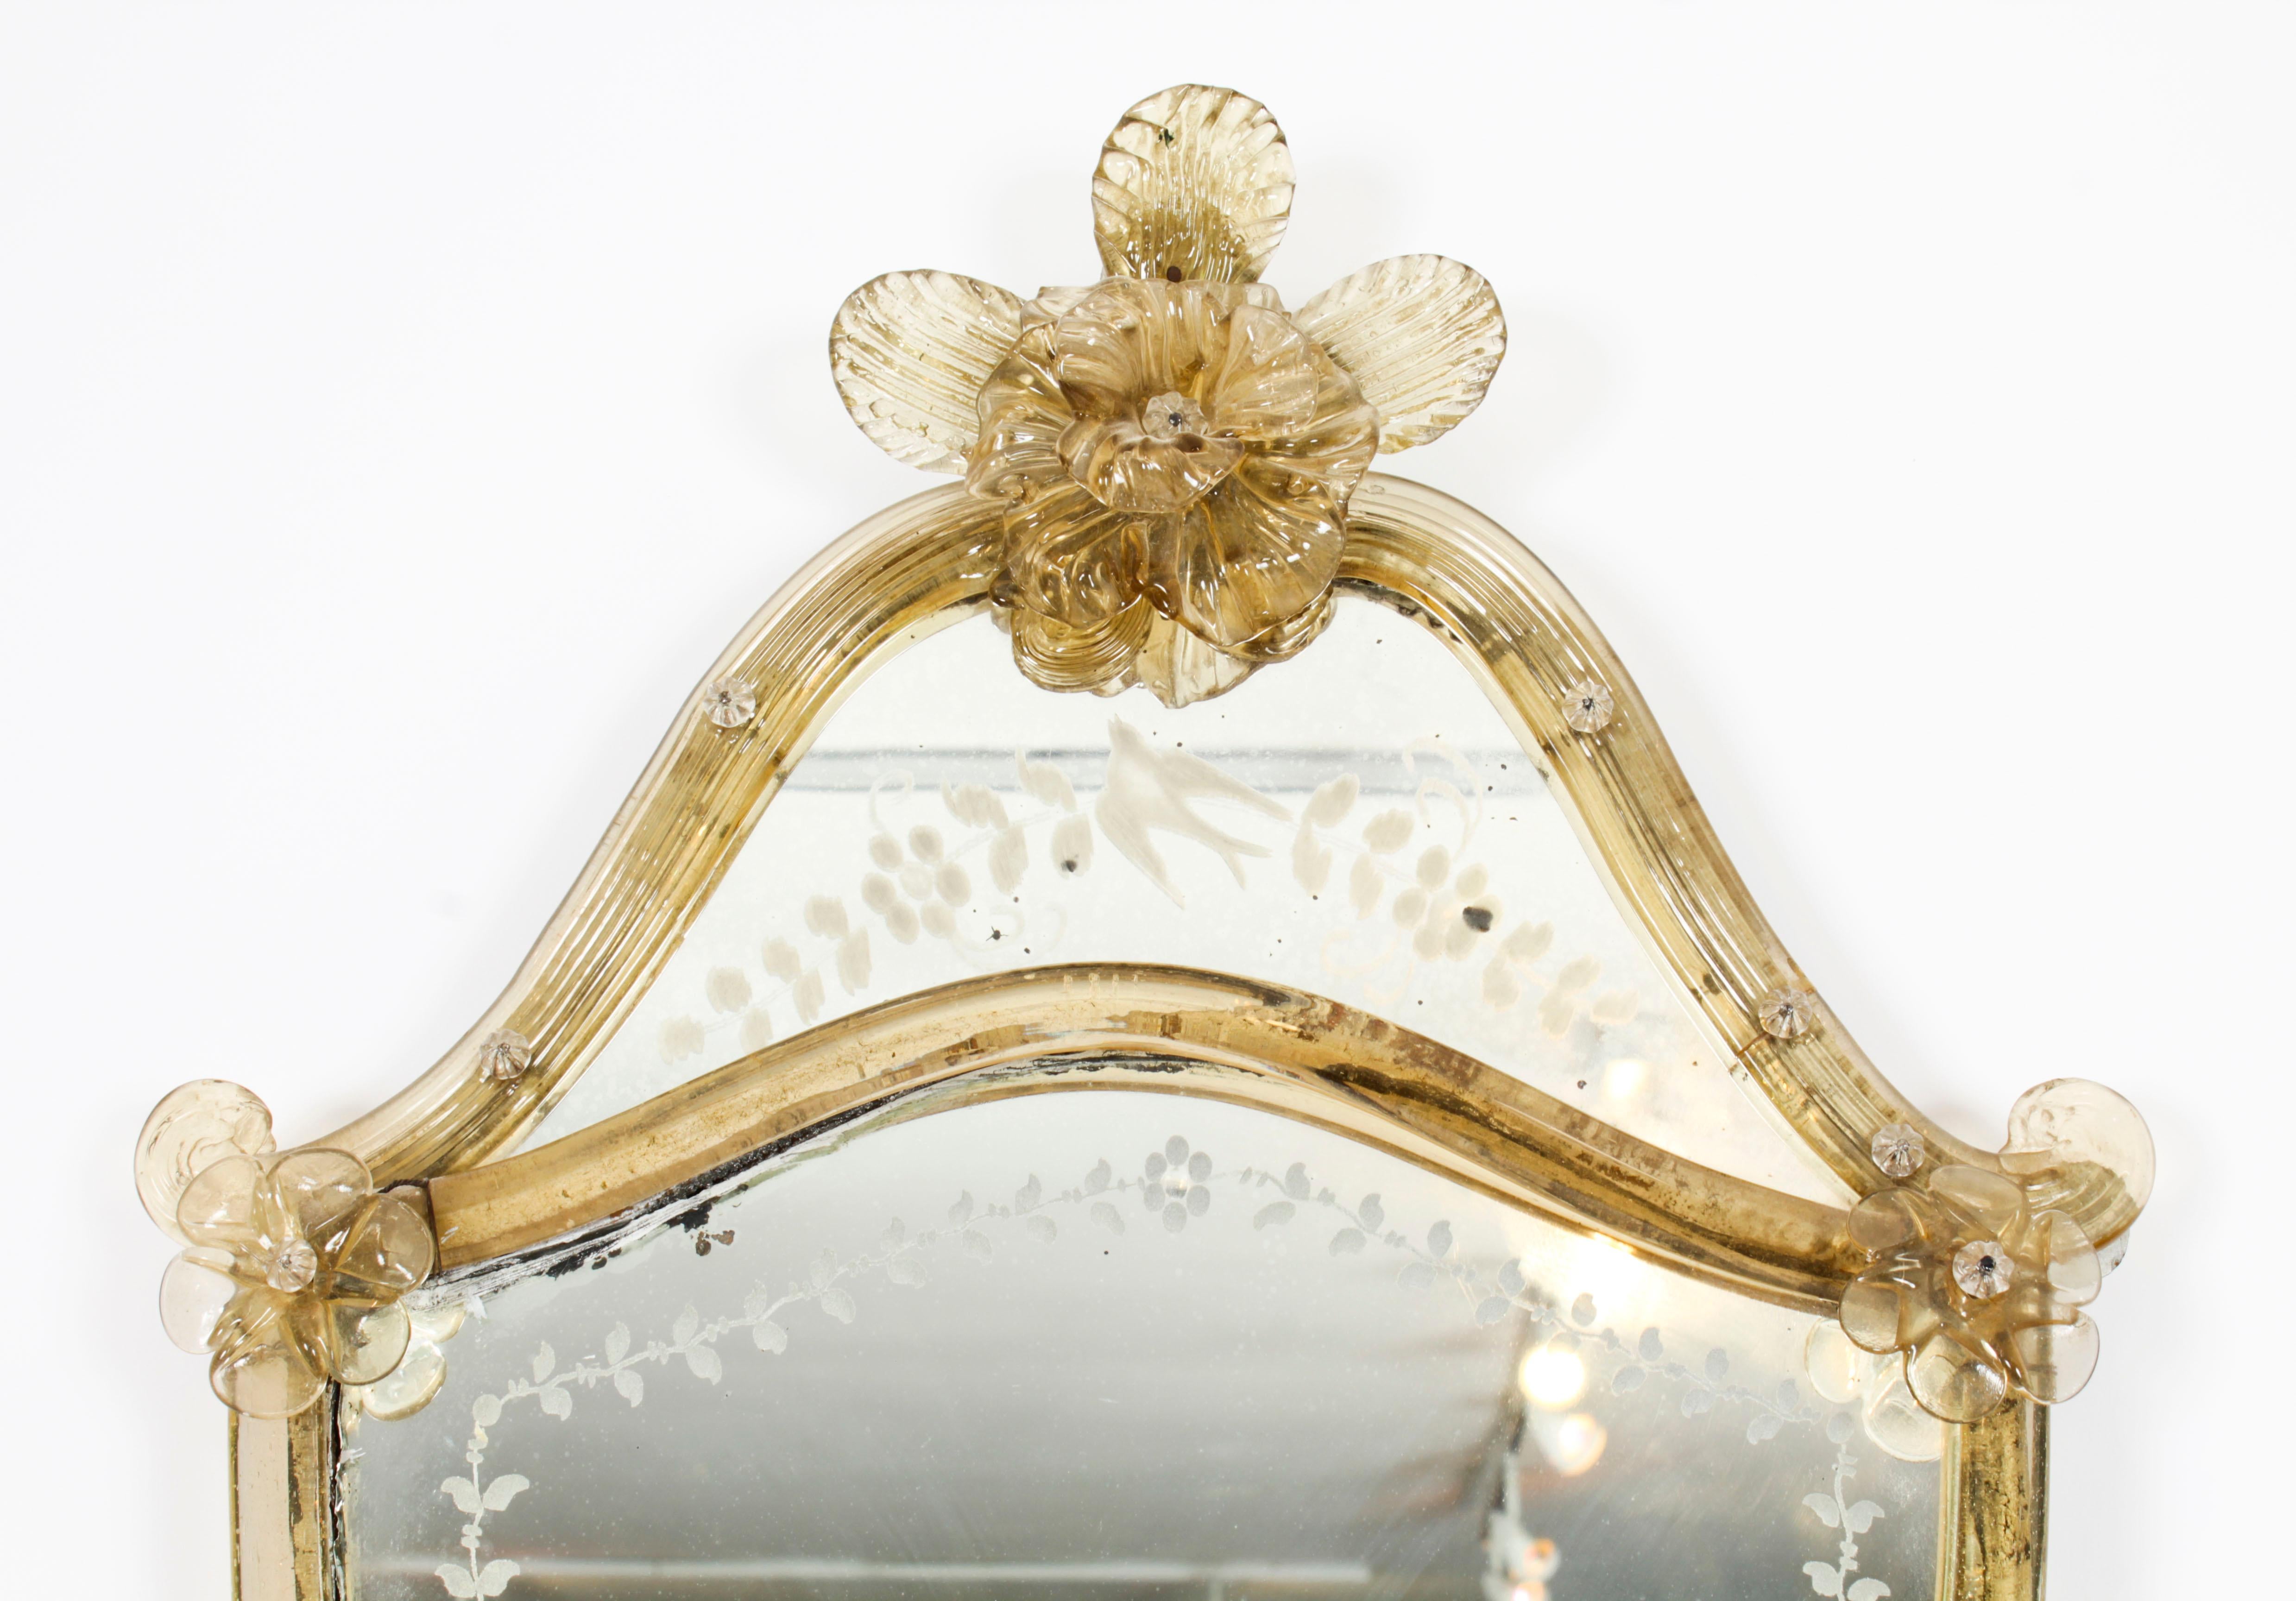 Italian Antique Shield Shaped Venetian Mirror 19th Century 69x37cm For Sale